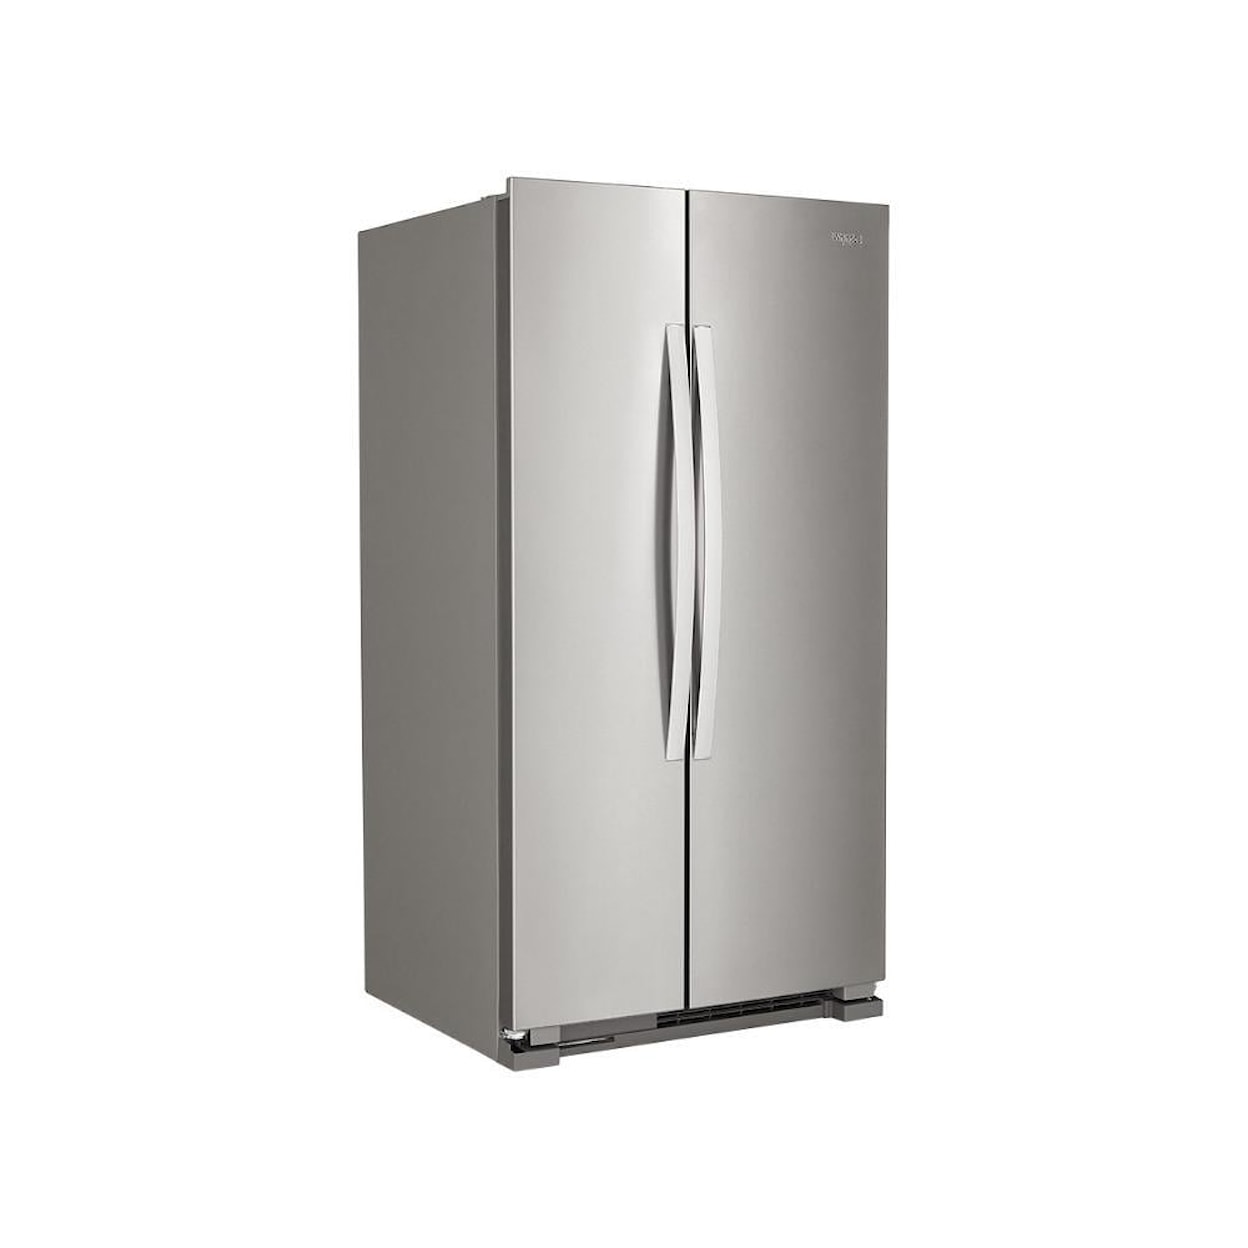 Whirlpool WRS312SNHM 33-inch Wide Side-by-Side Refrigerator - 22 cu. ft ...